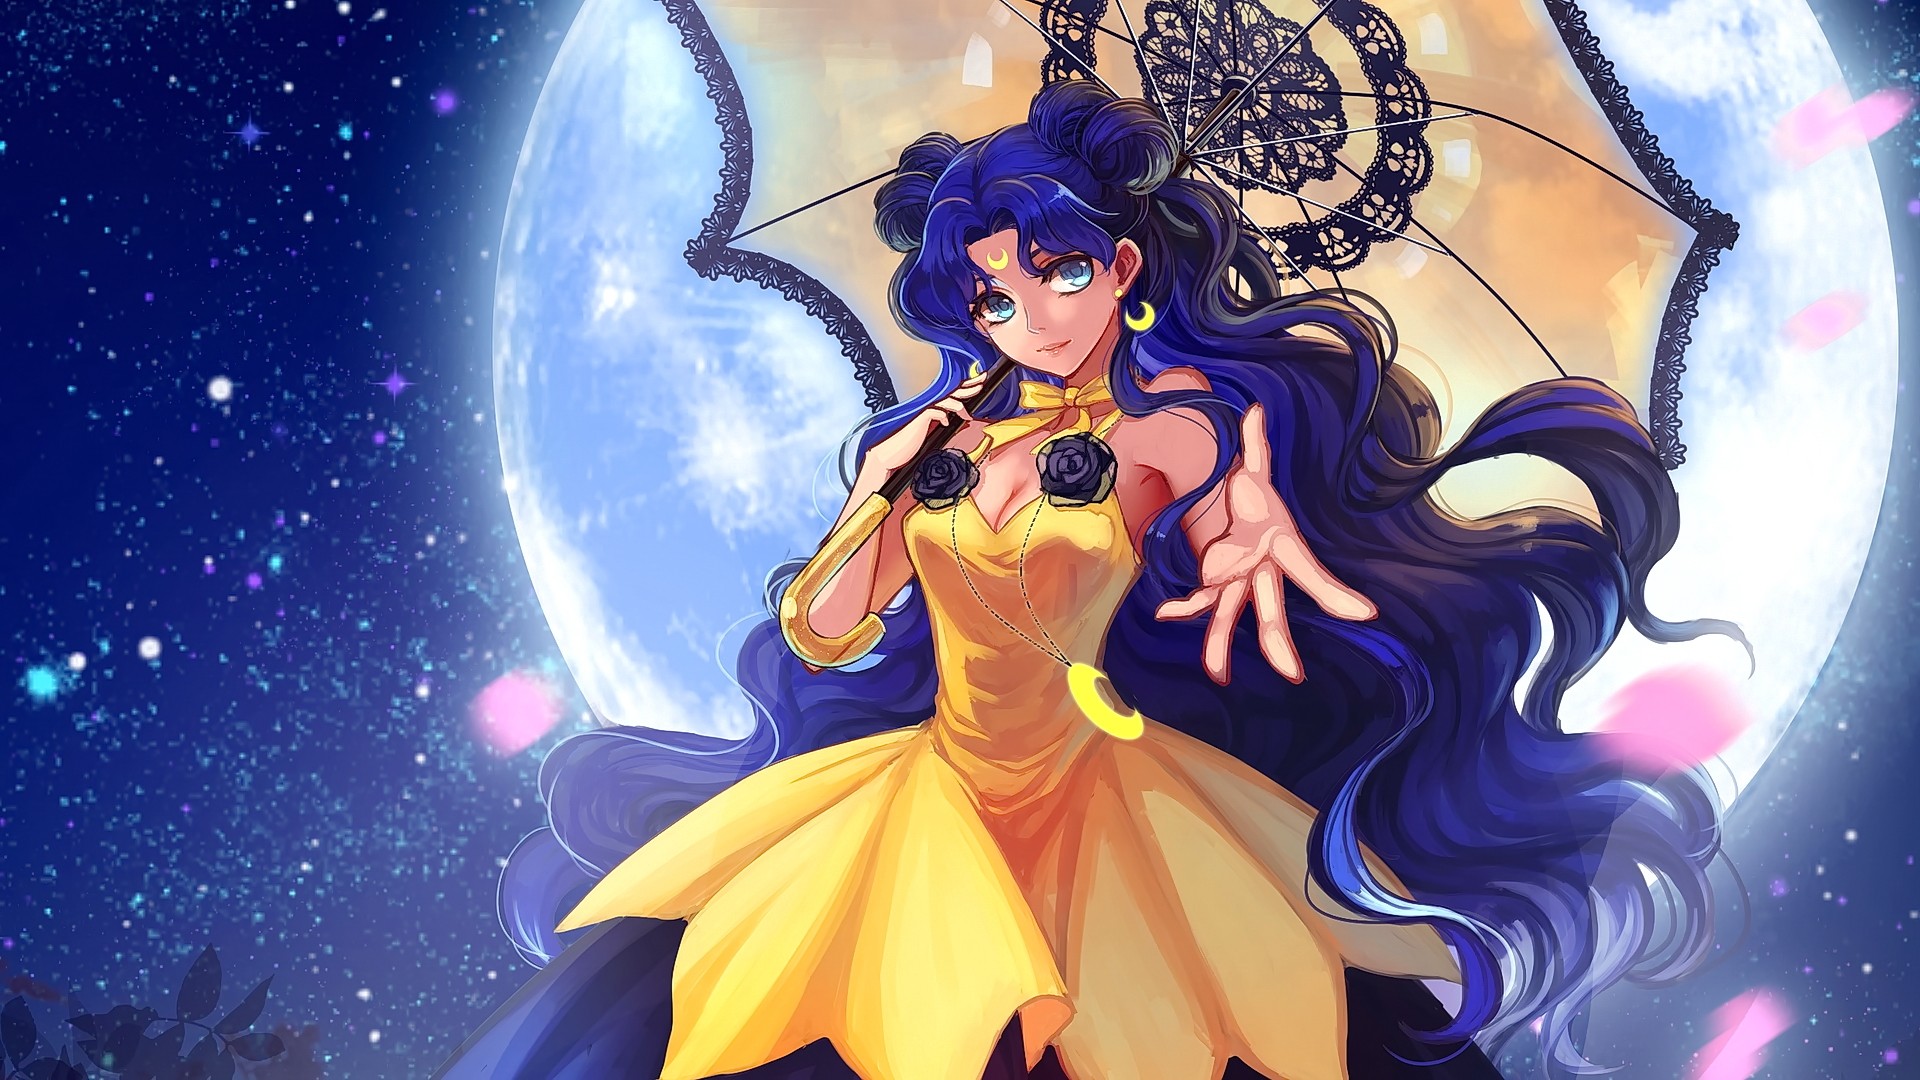 Anime 1920x1080 anime anime girls Moon blue hair long hair dress umbrella Sailor Moon yellow dress women with umbrella